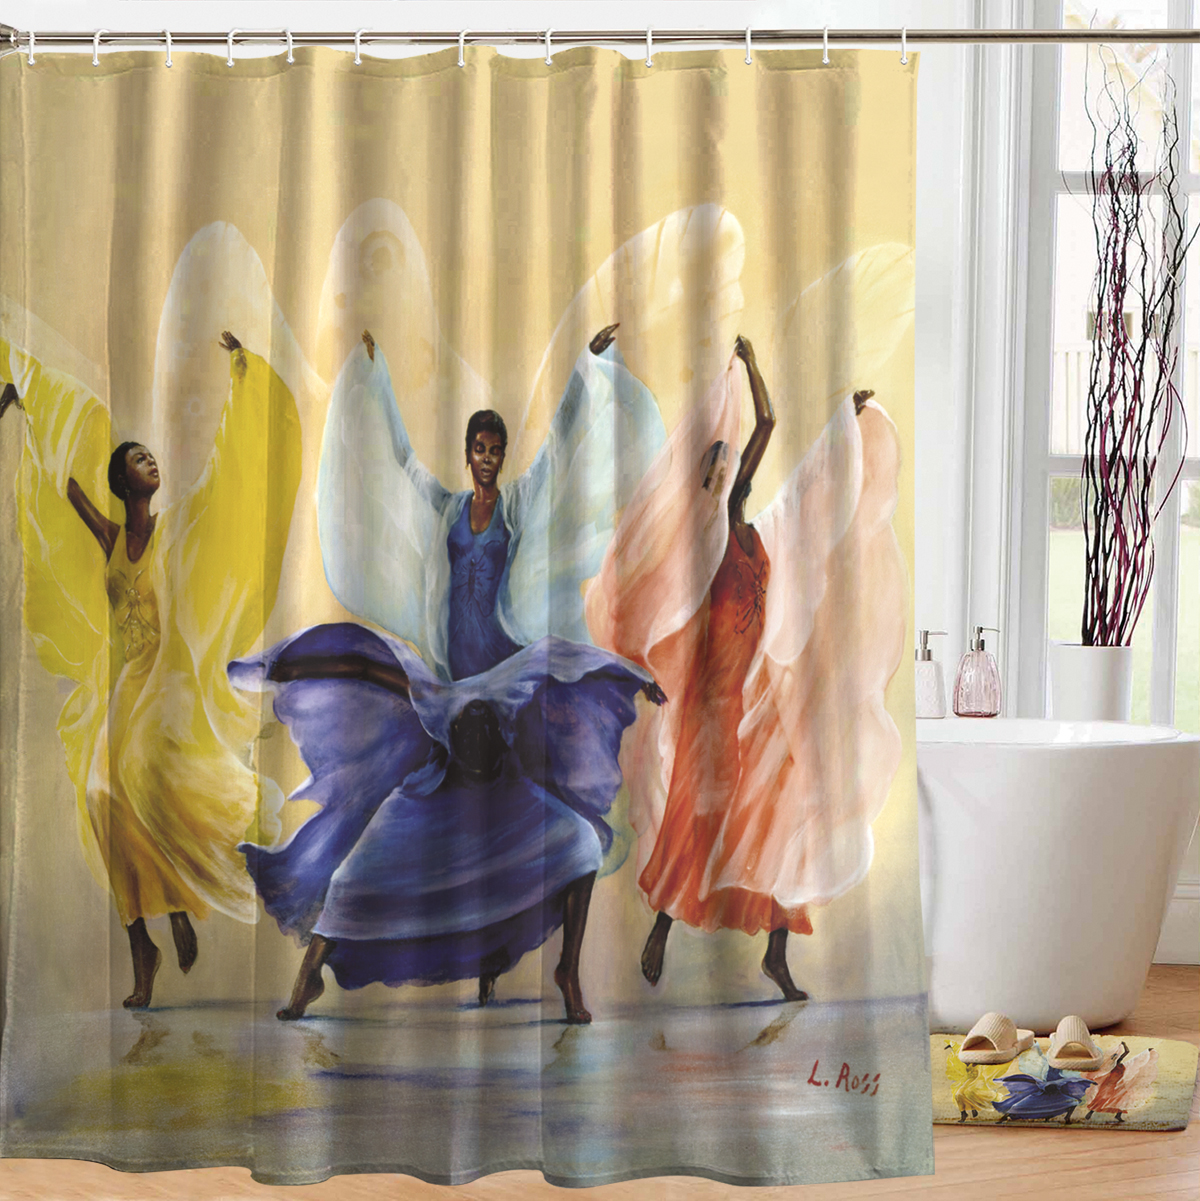 Shower Curtains Erfly Design, African Design Shower Curtains